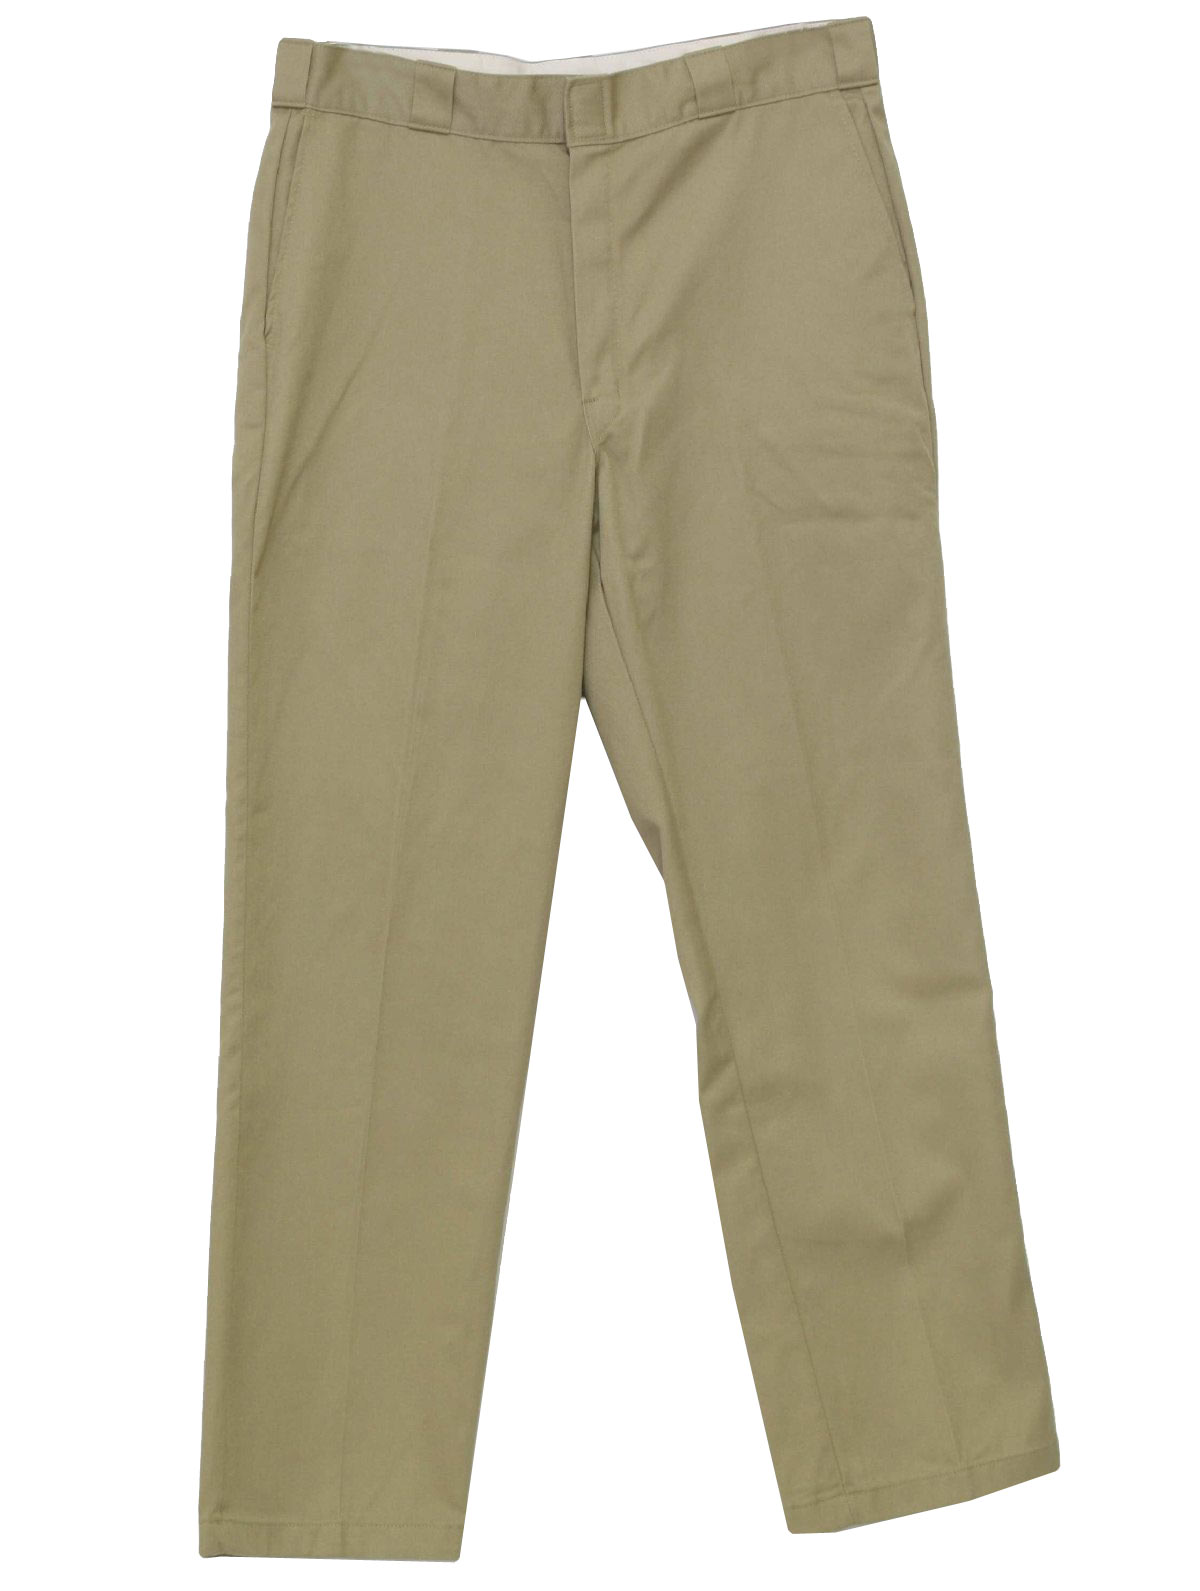 90s Pants (Dickies): 90s -Dickies- Mens tan cotton polyester blend ...